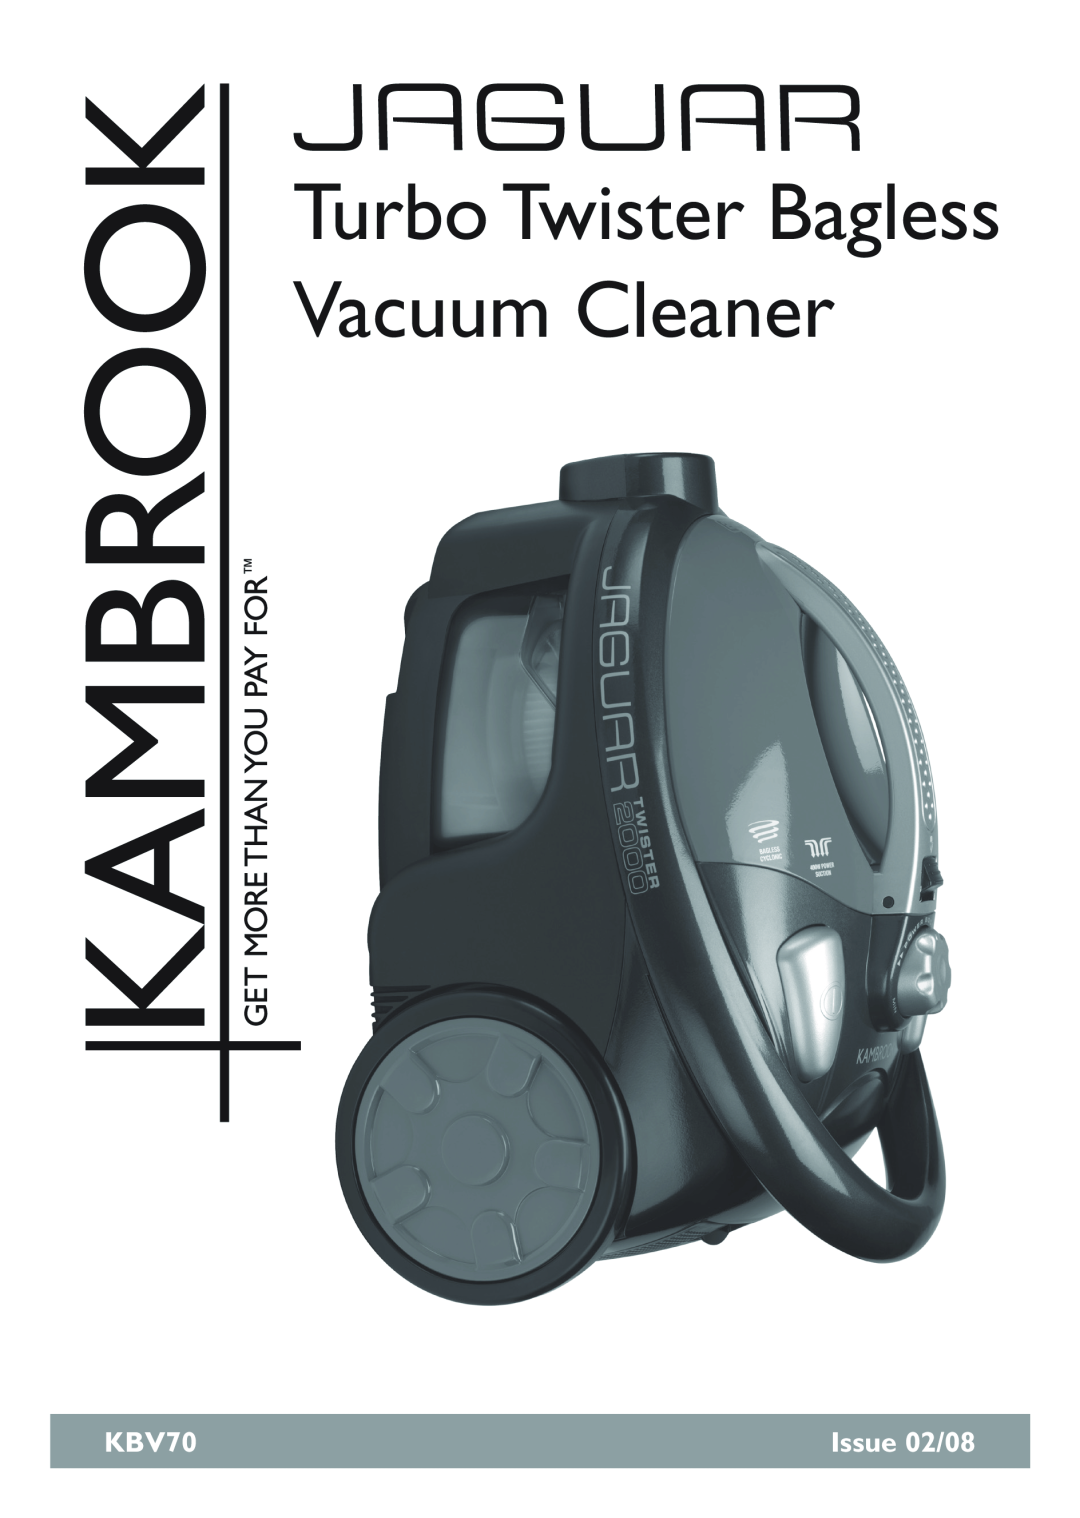 Kambrook KBV70 manual Turbo Twister Bagless Vacuum Cleaner, Issue 02/08 